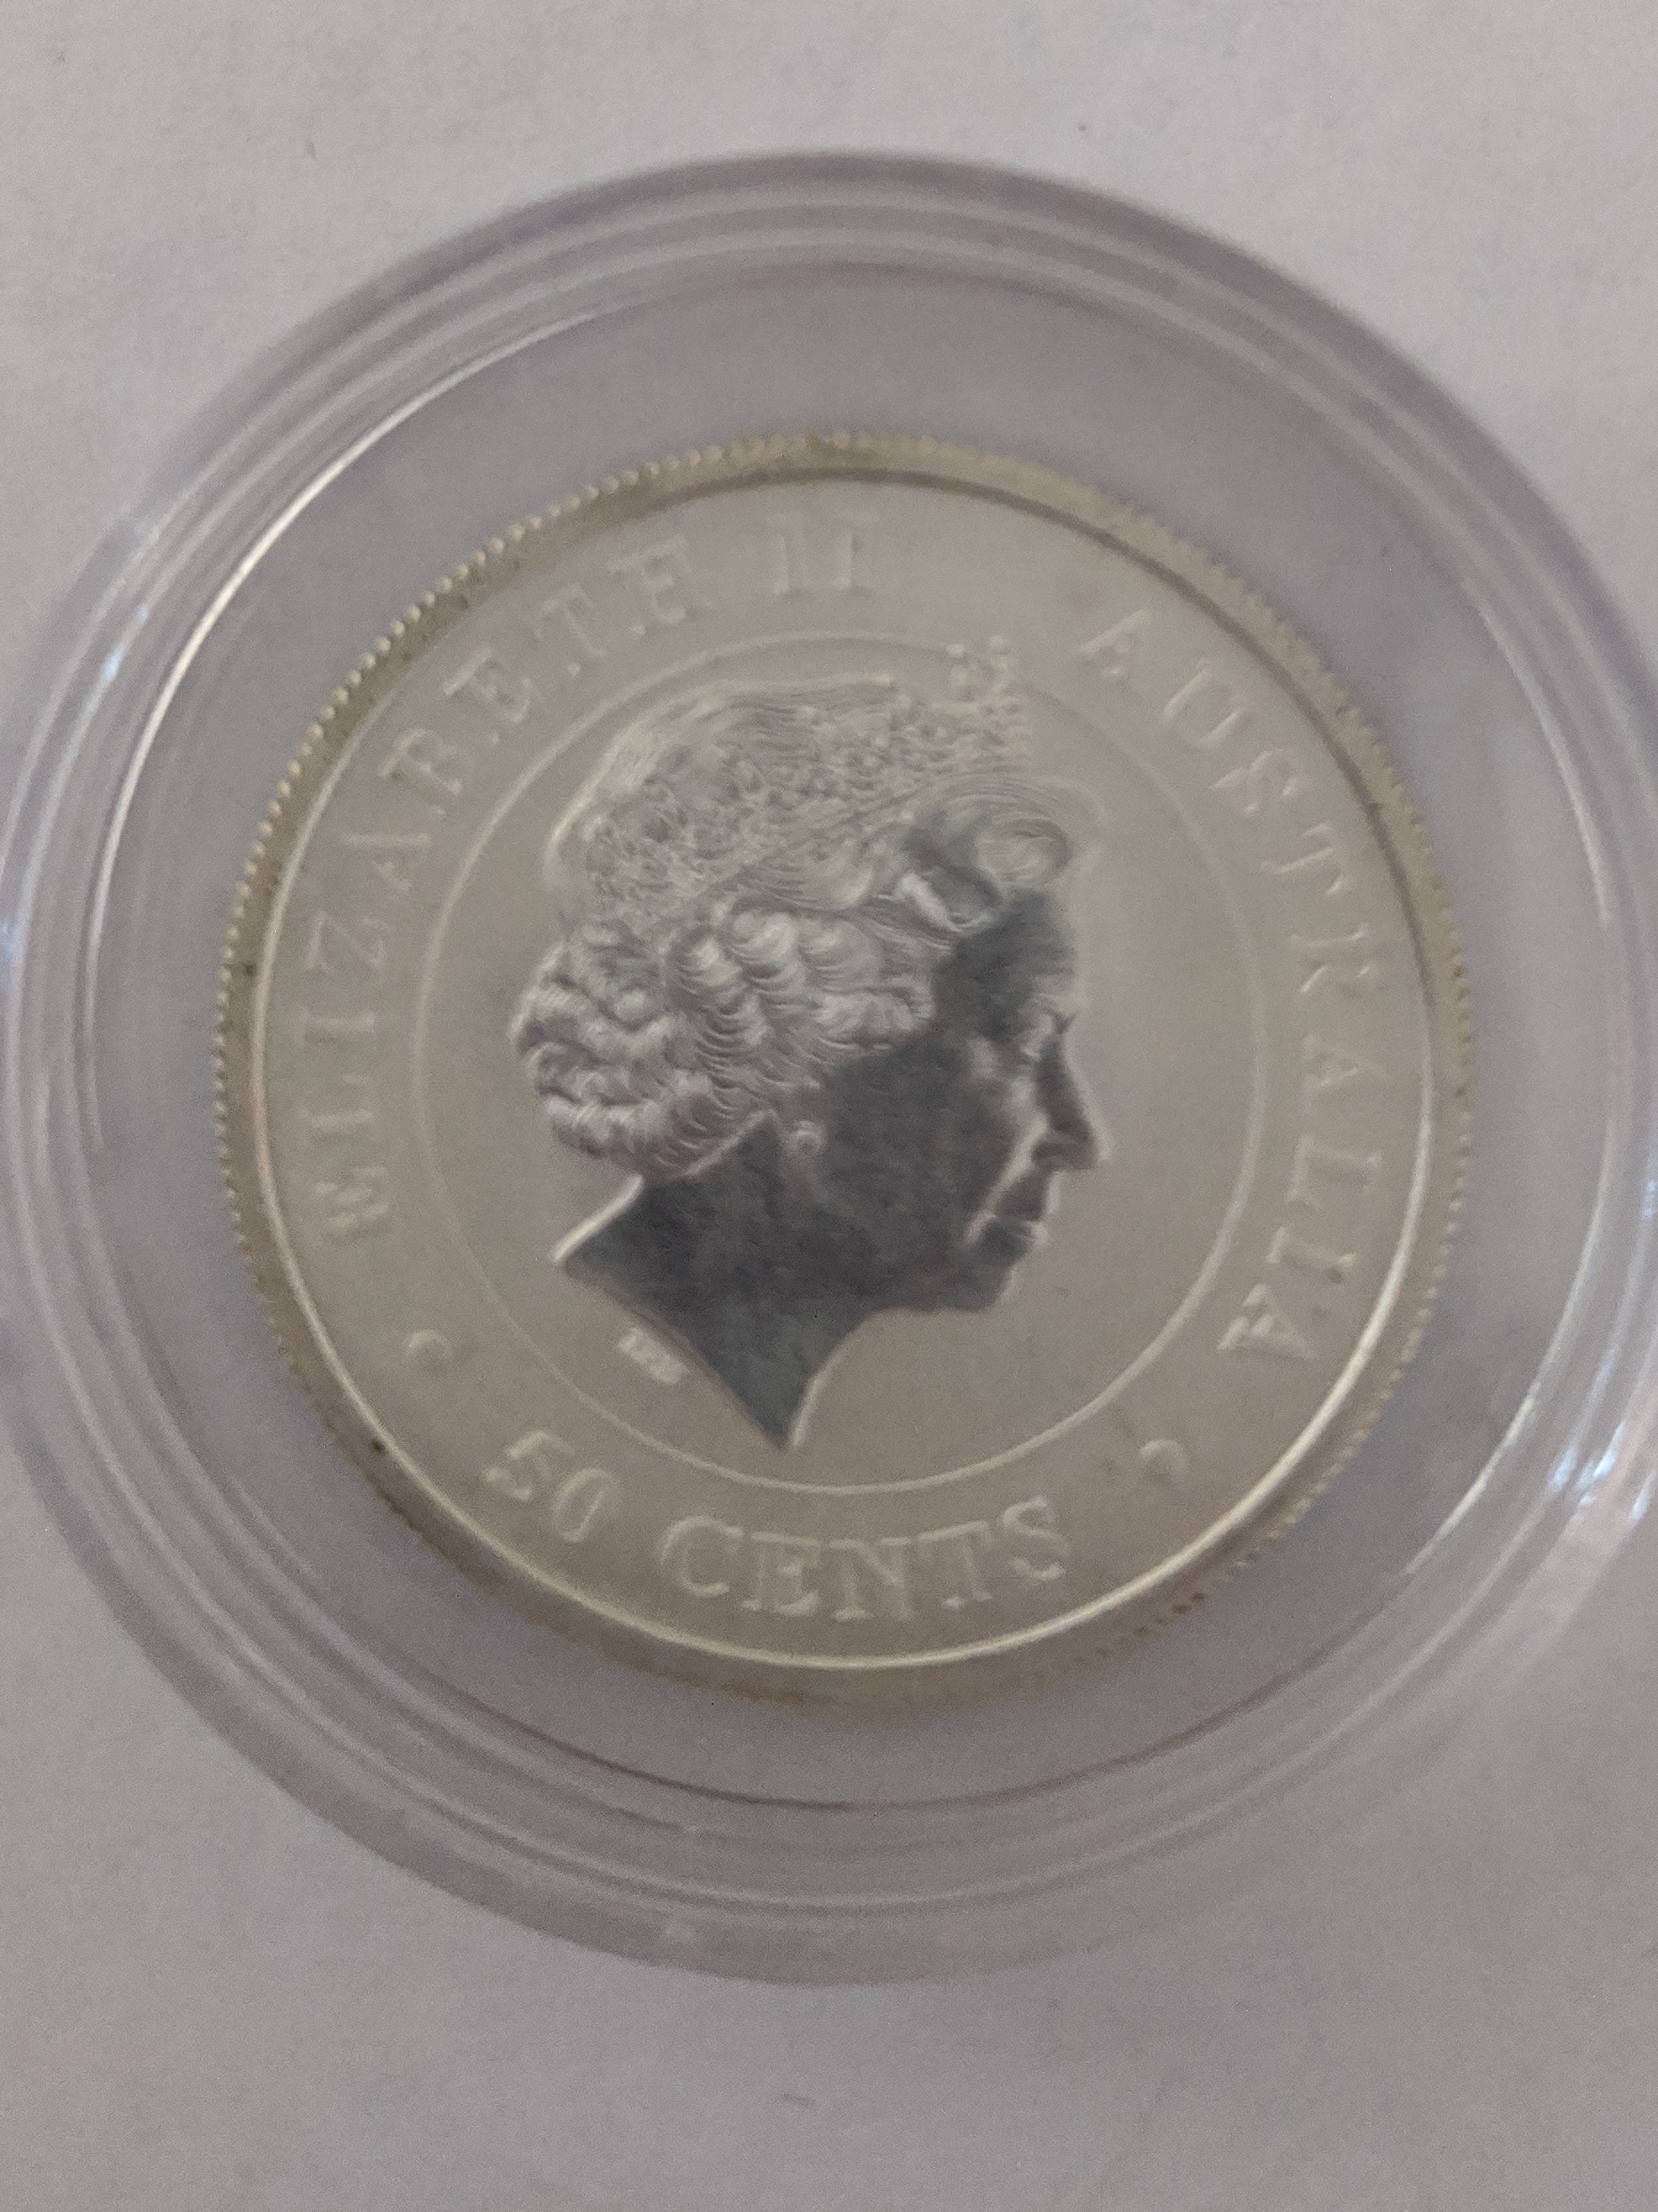 Back One Half Oz Great White Shark 2014 Silver Coin Lot 1 (2).jpg